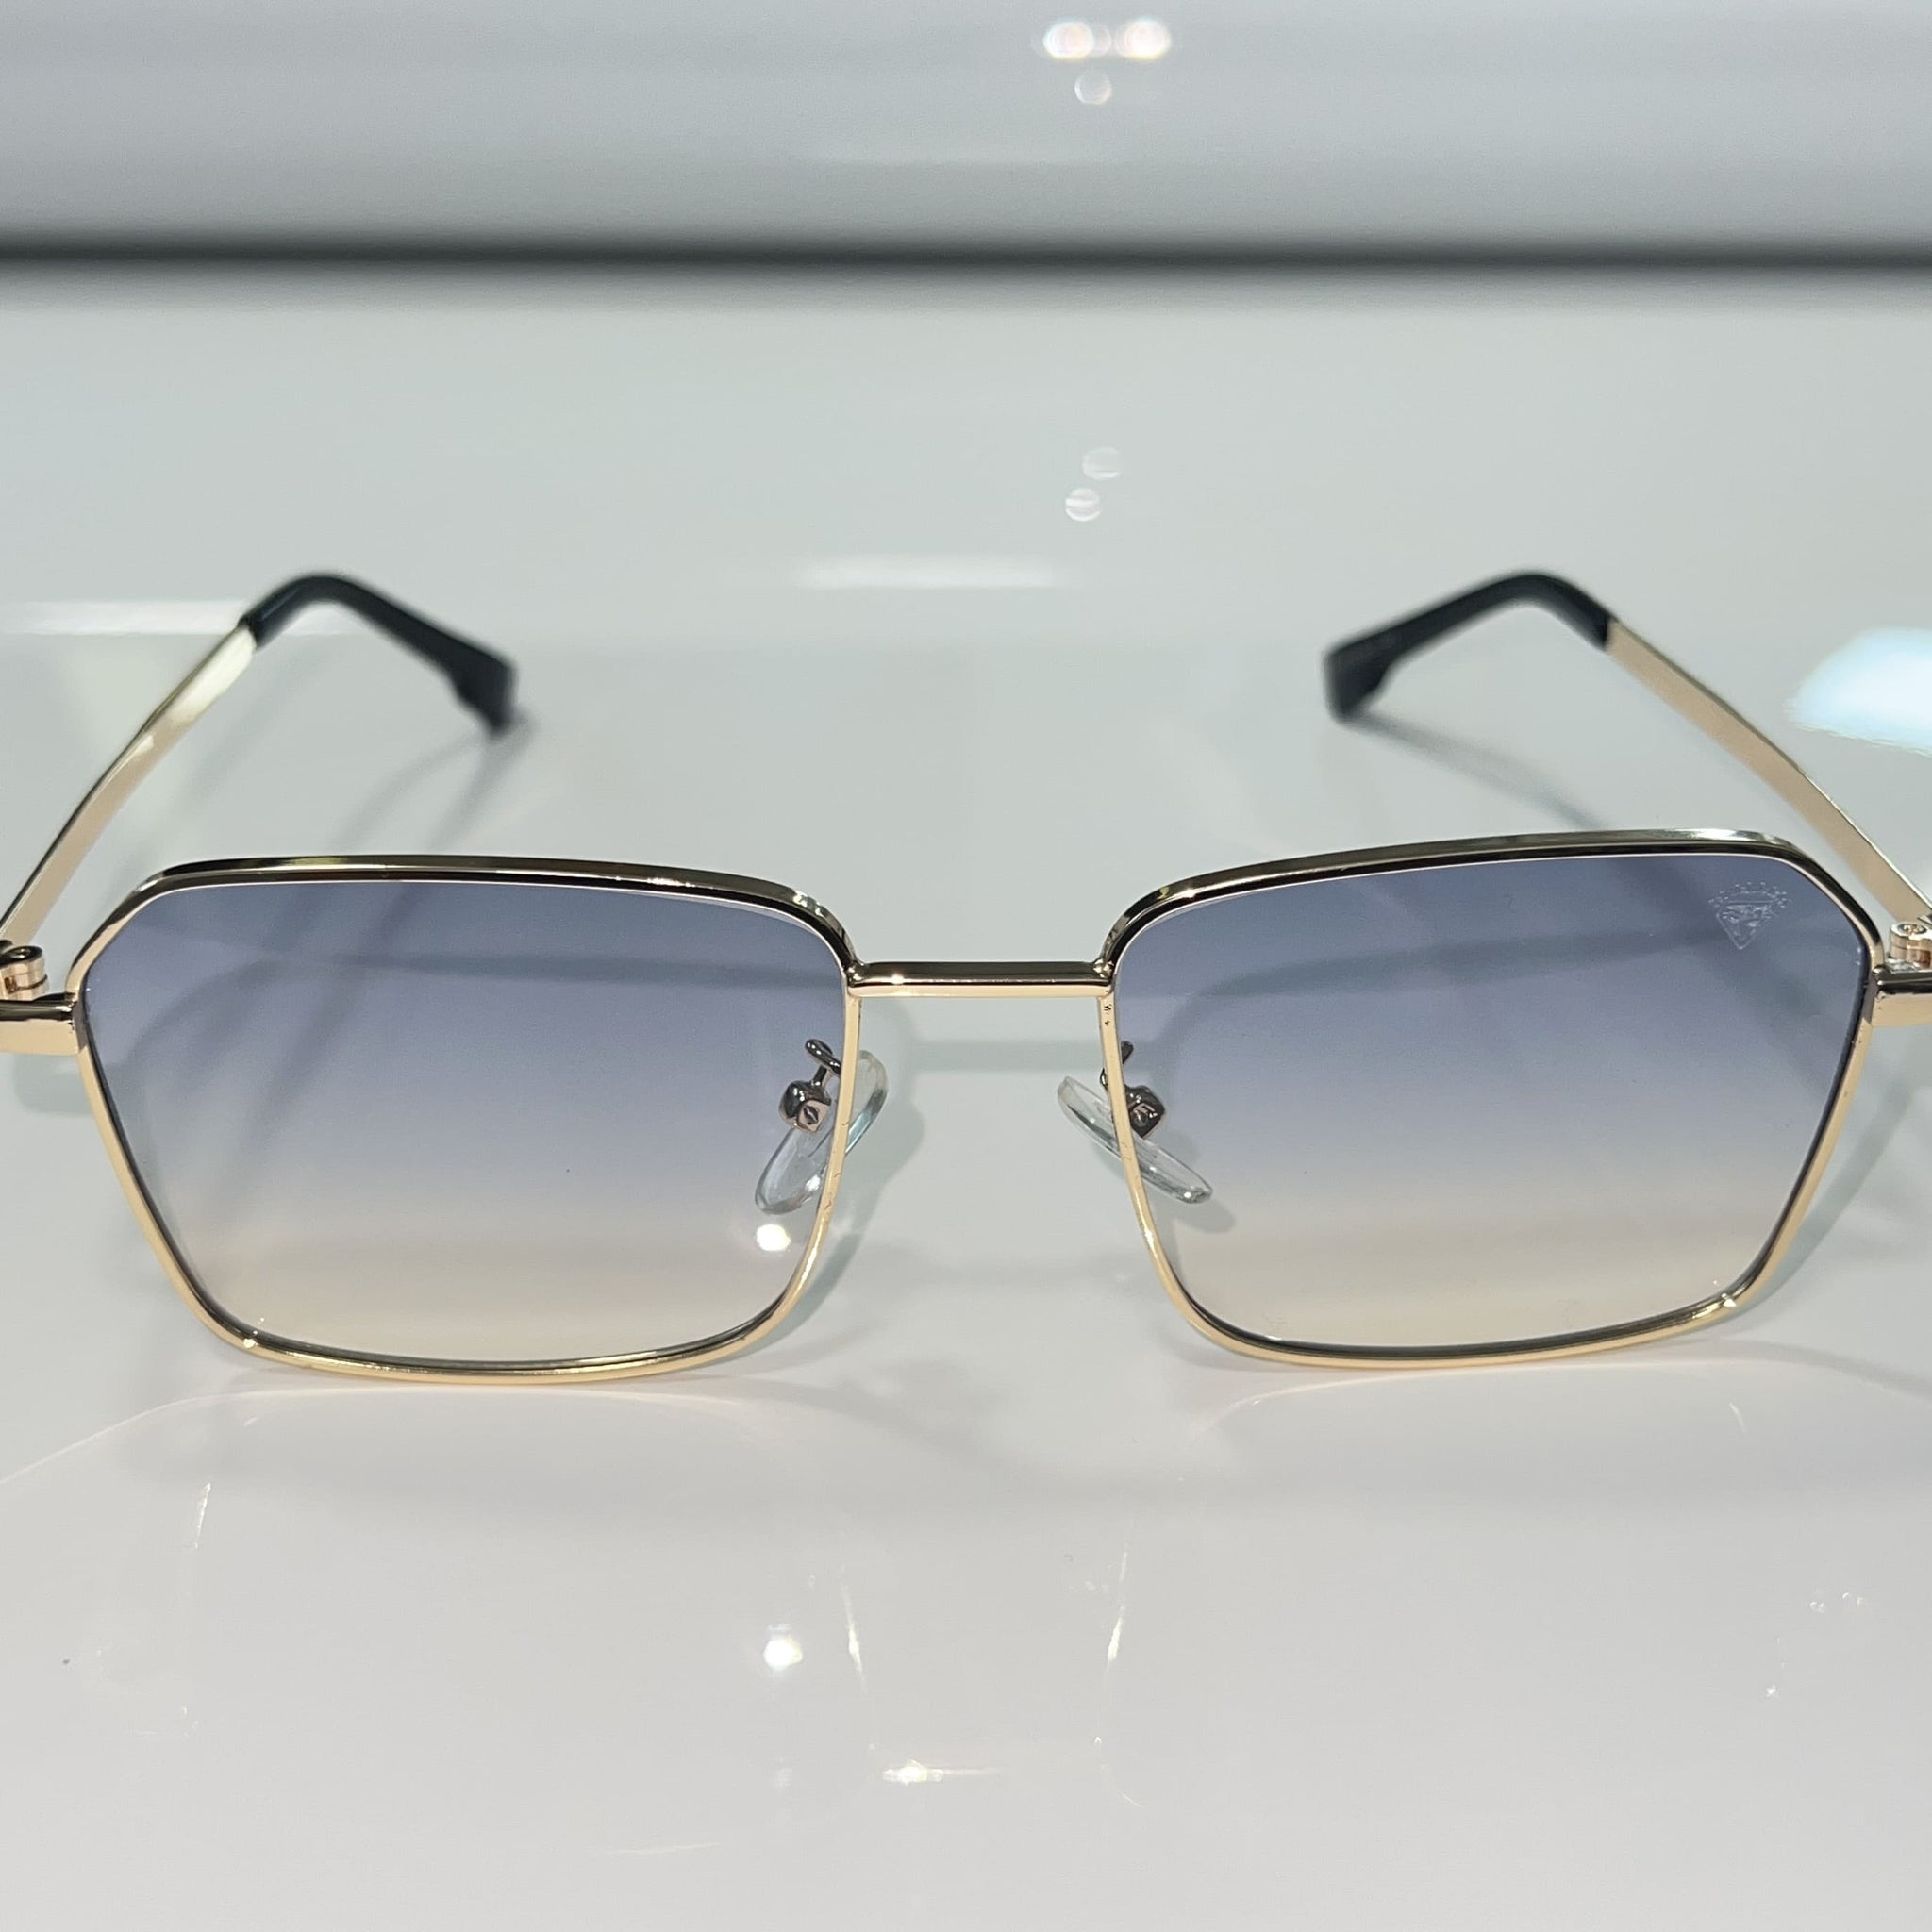 Celebrity Glasses - 14k gold plated - Sehgal Glasses - Blue Shade / Dark to Light